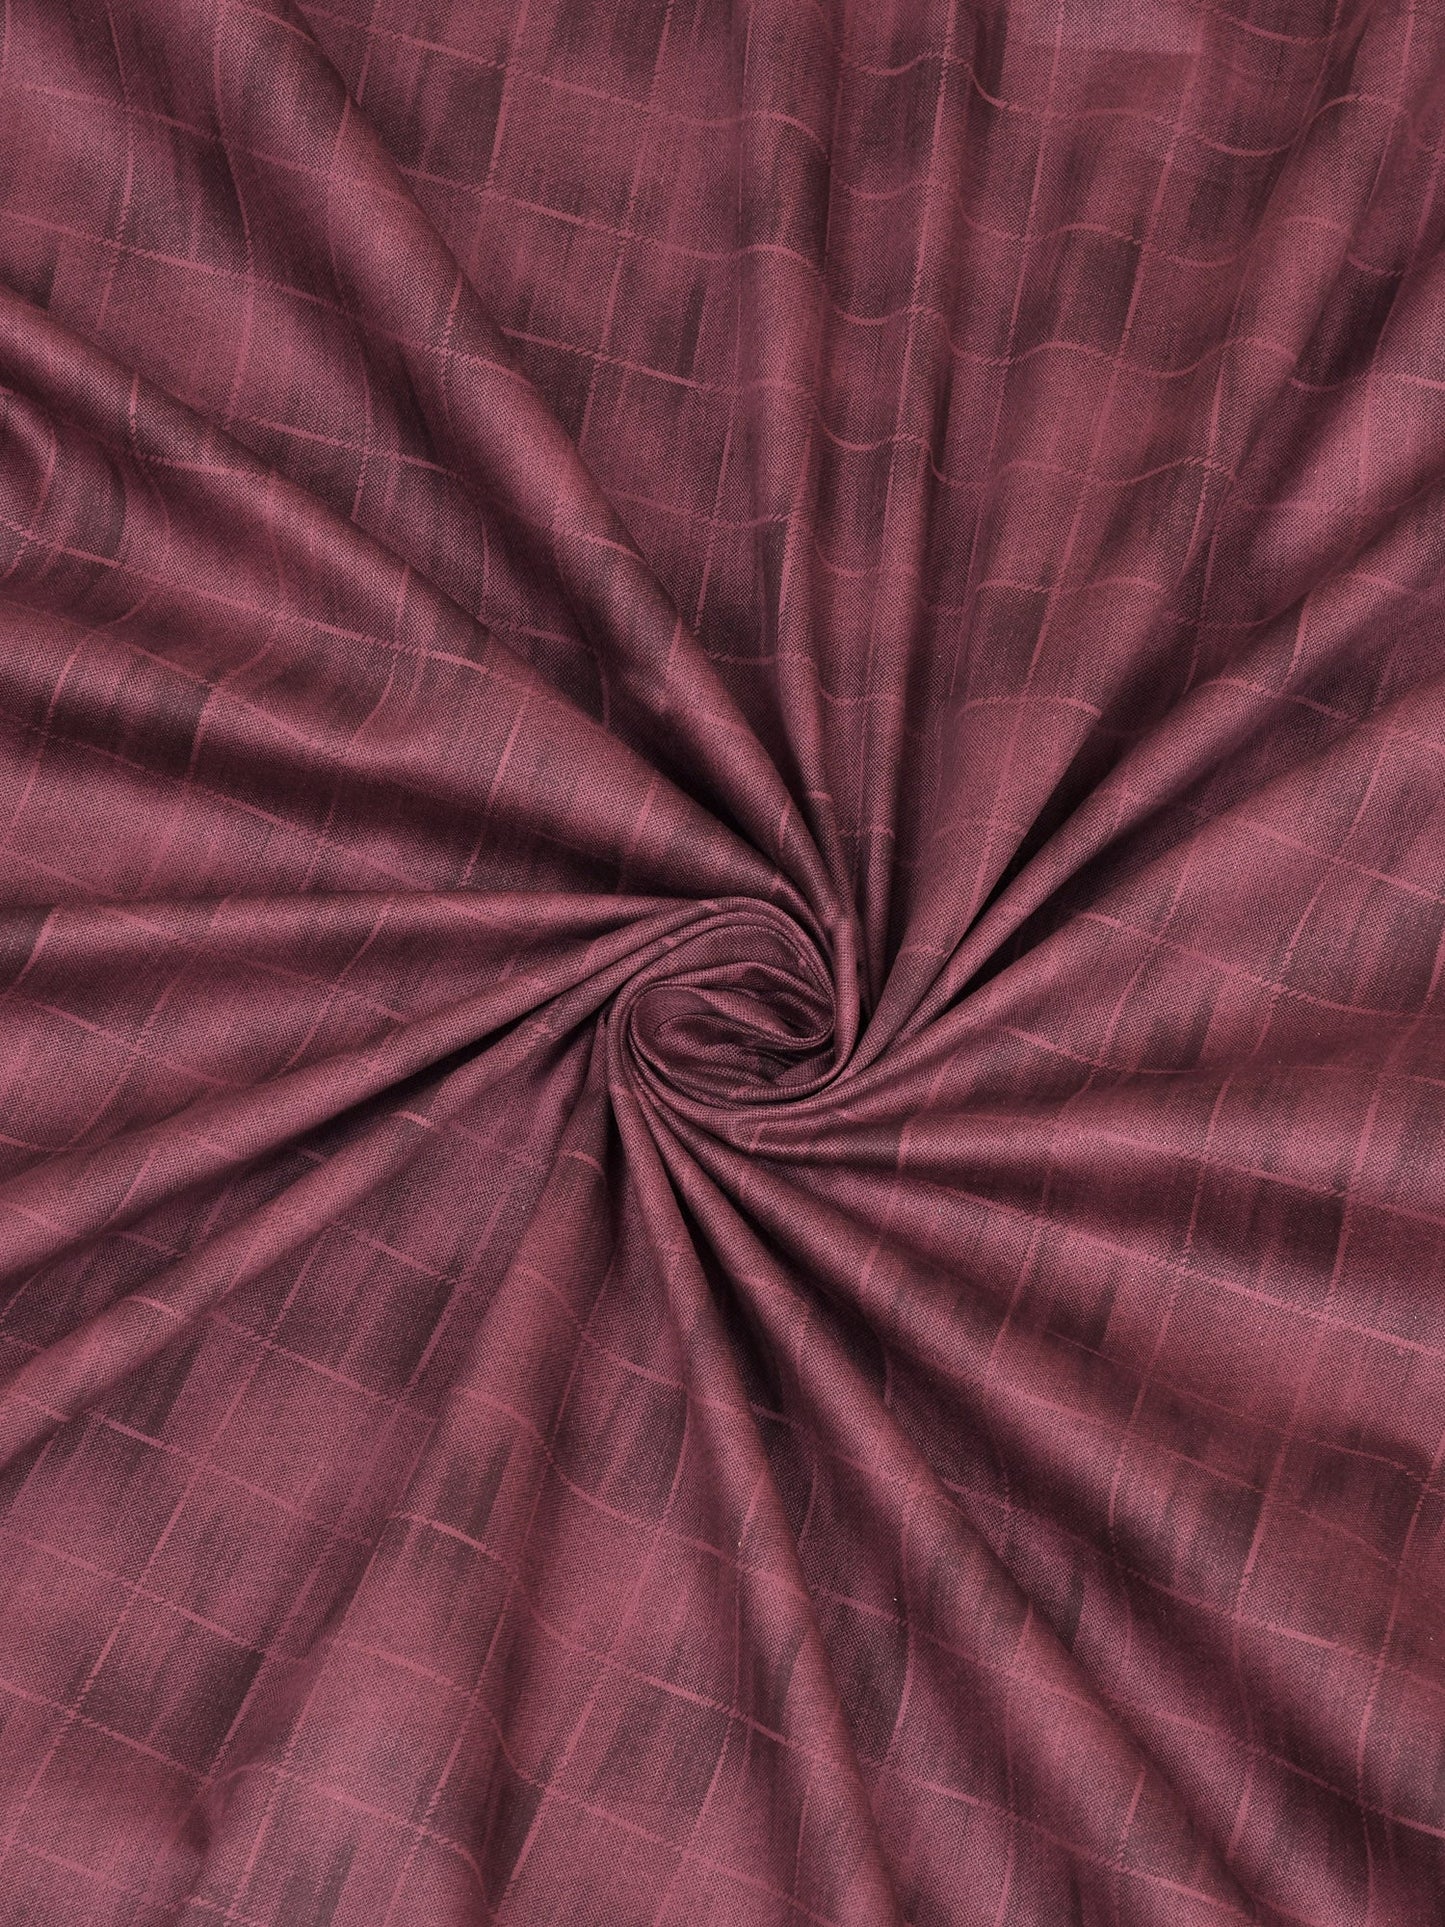 Abstract Super King 100% Cotton Bedsheet Set